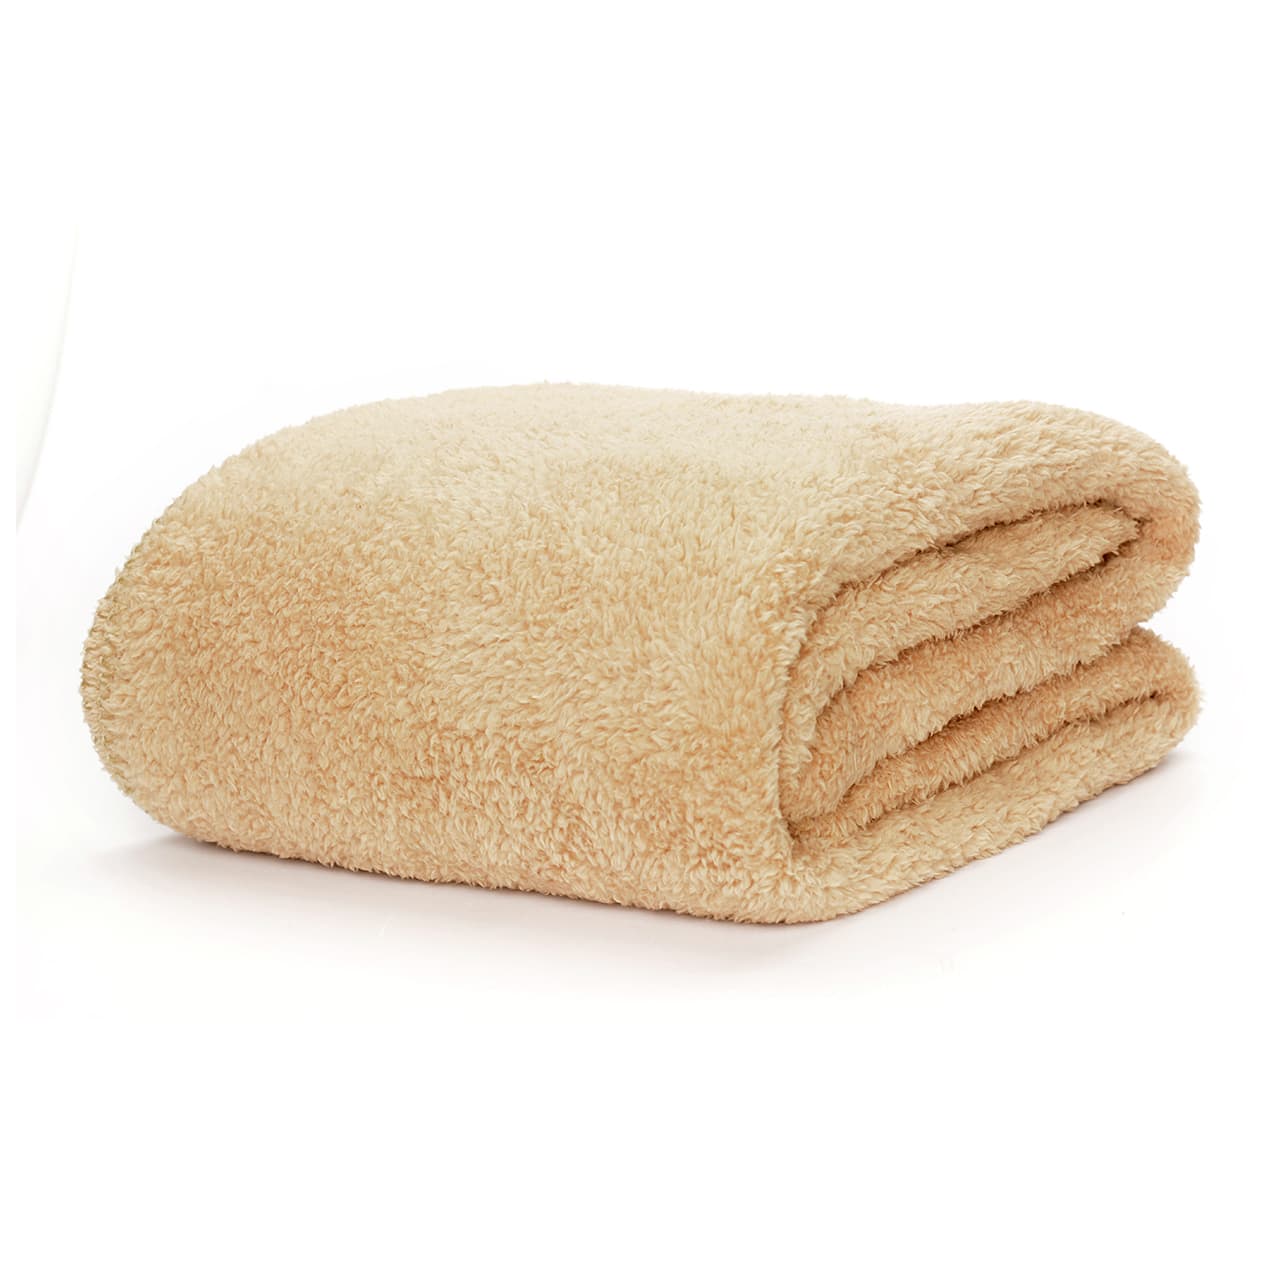 Snug-Rug Sherpa Throw Blanket (Sand Beige)